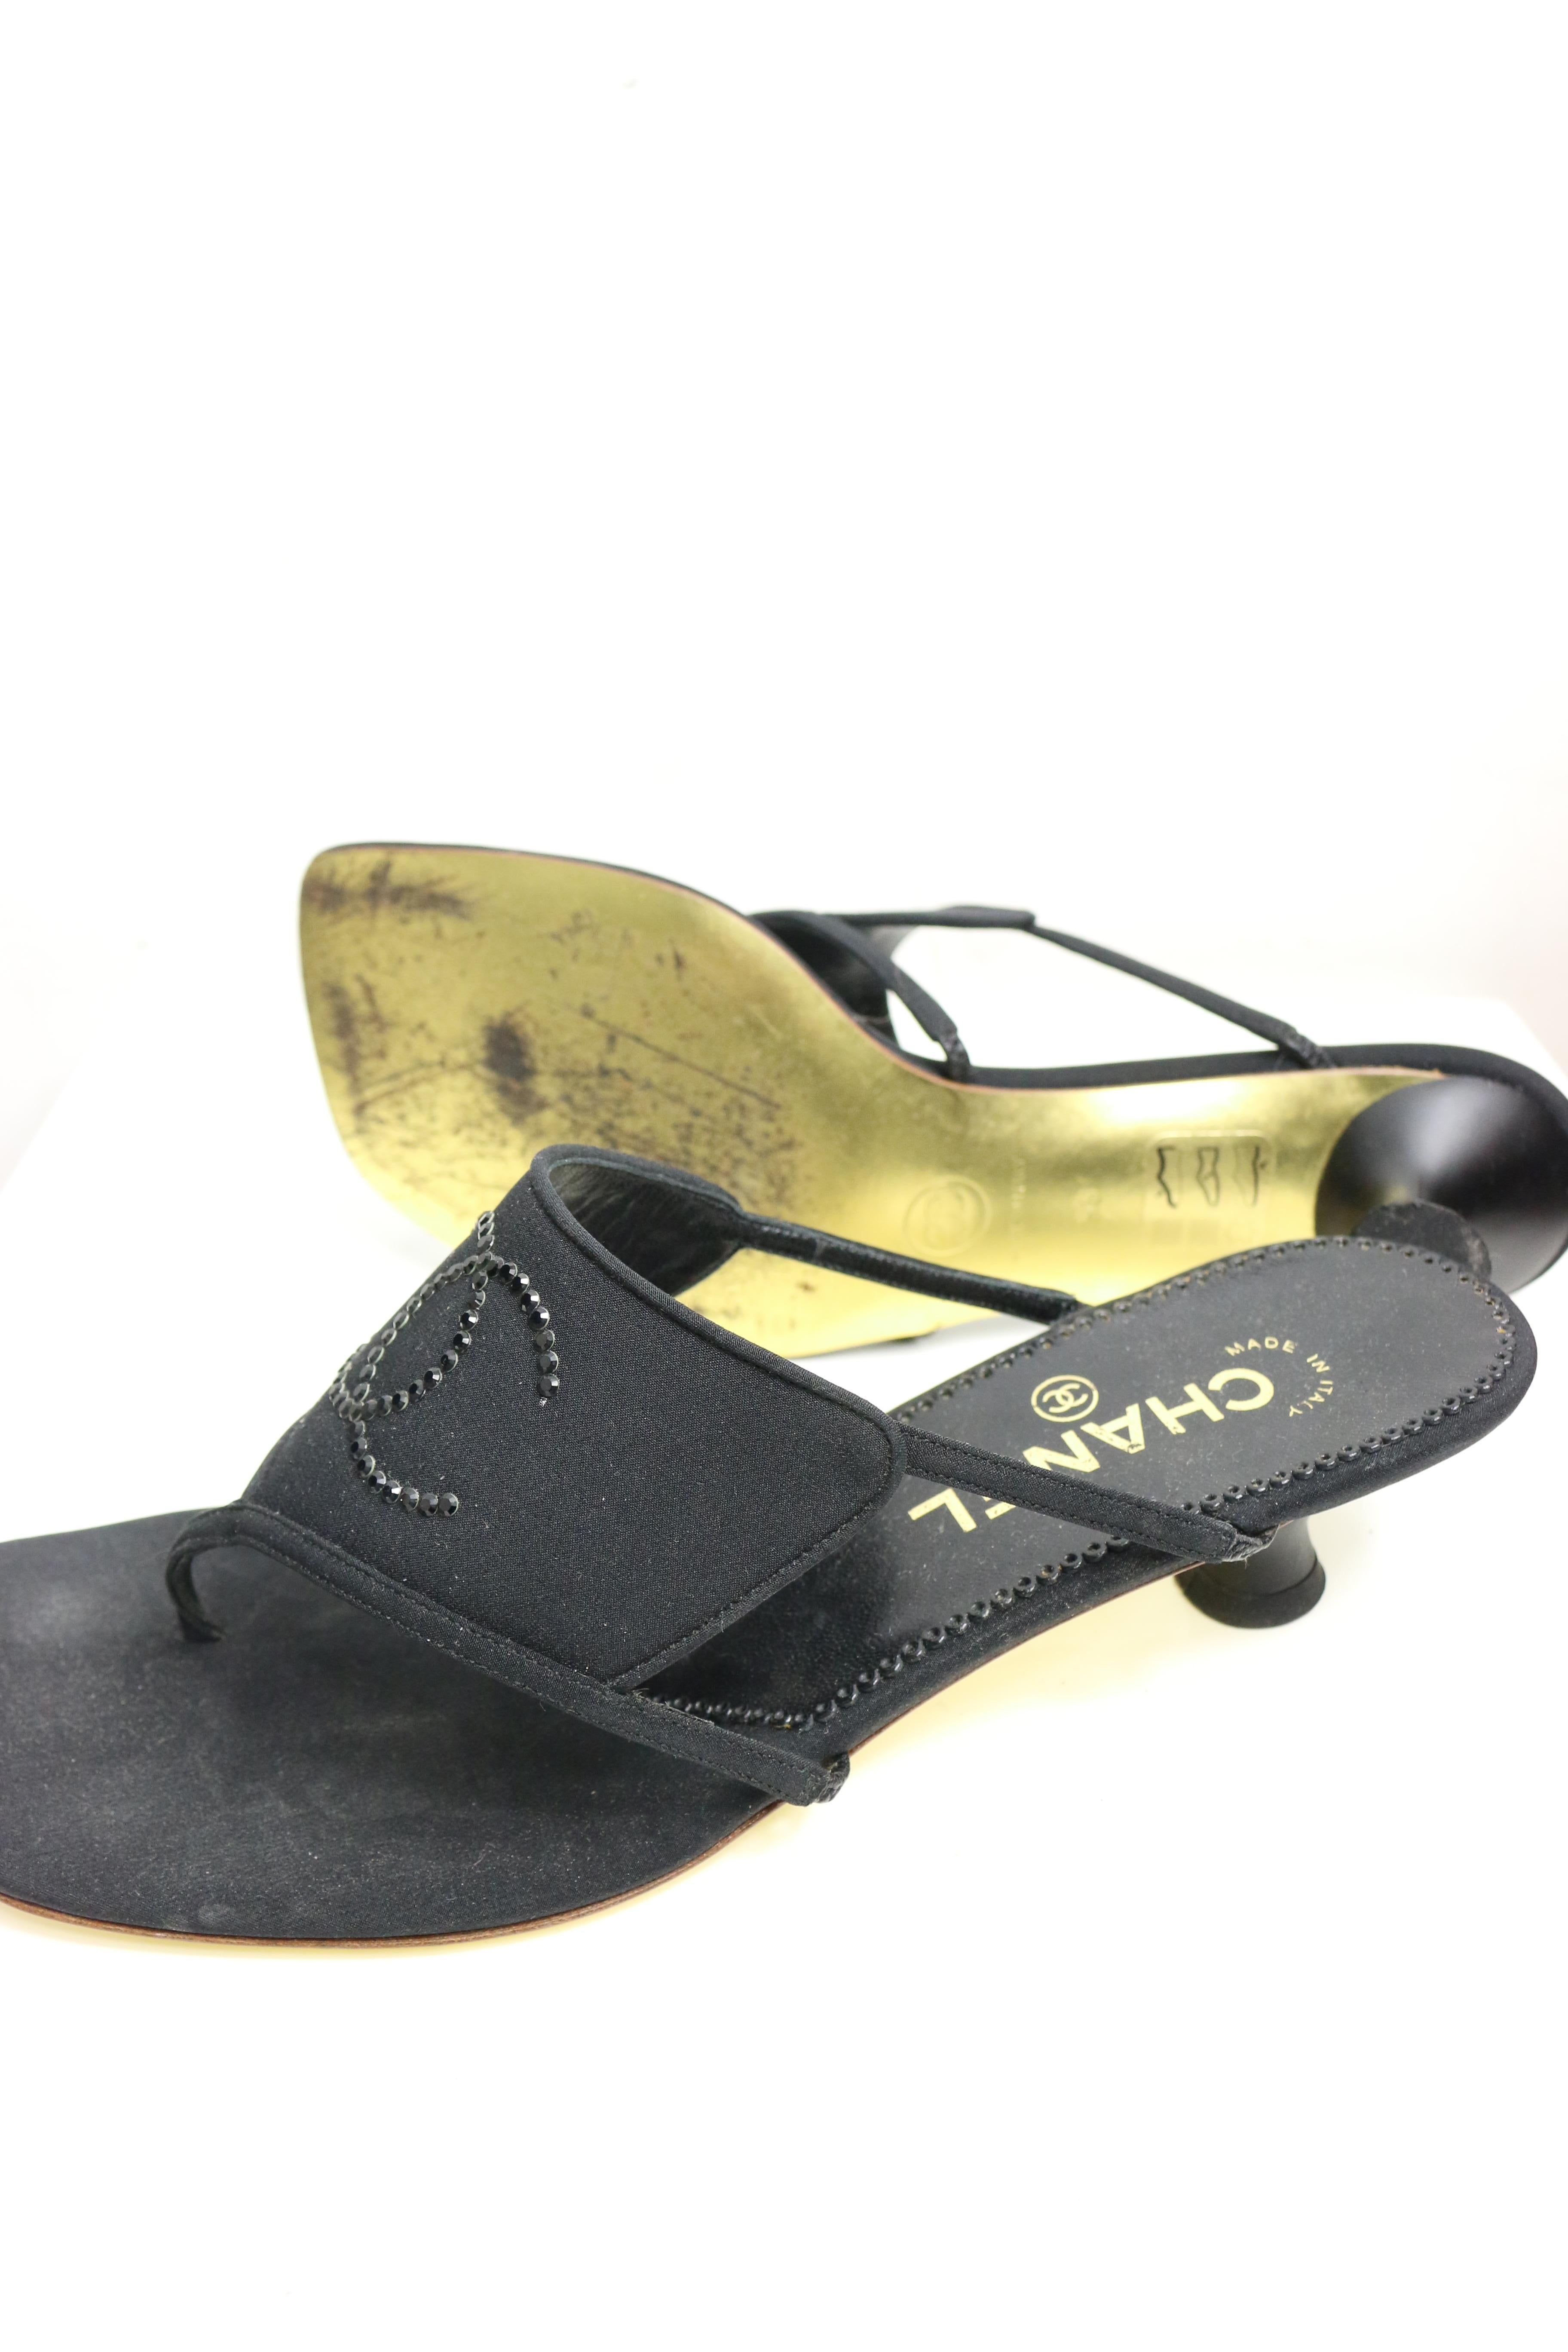 black sandals with rhinestones